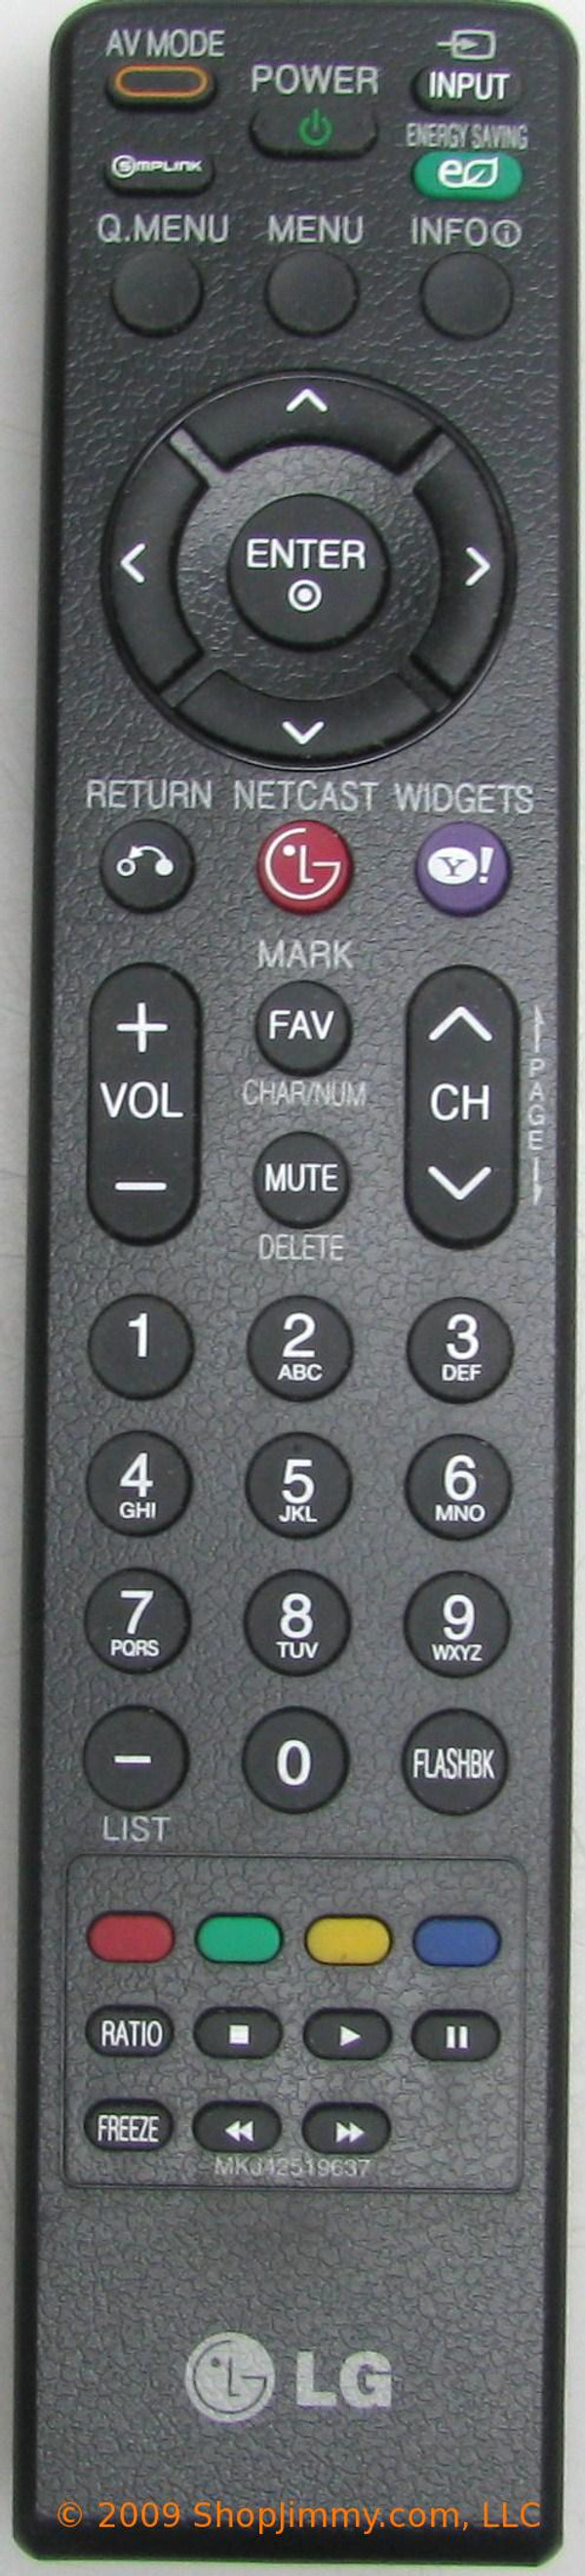 LG MKJ42519637 Remote Control